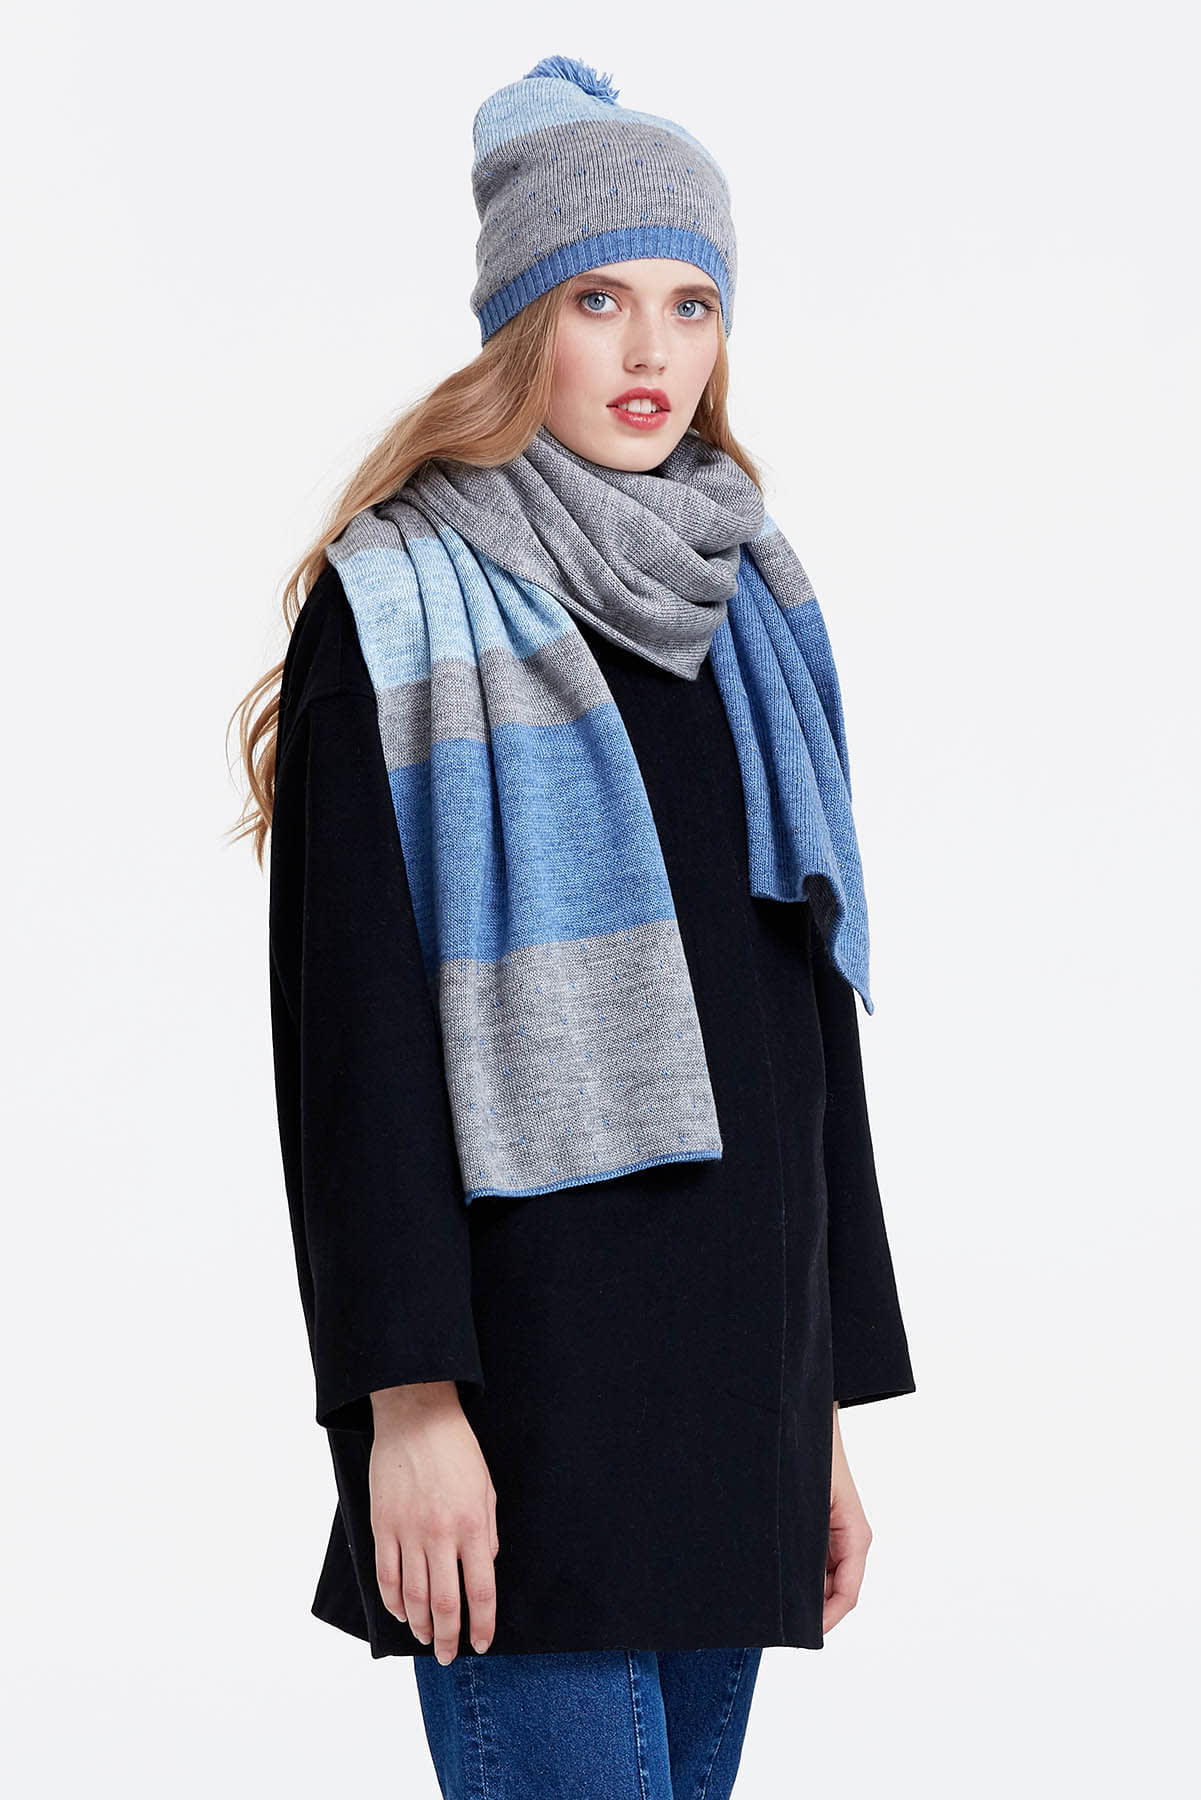 Grey scarf with blue stripes, photo 2